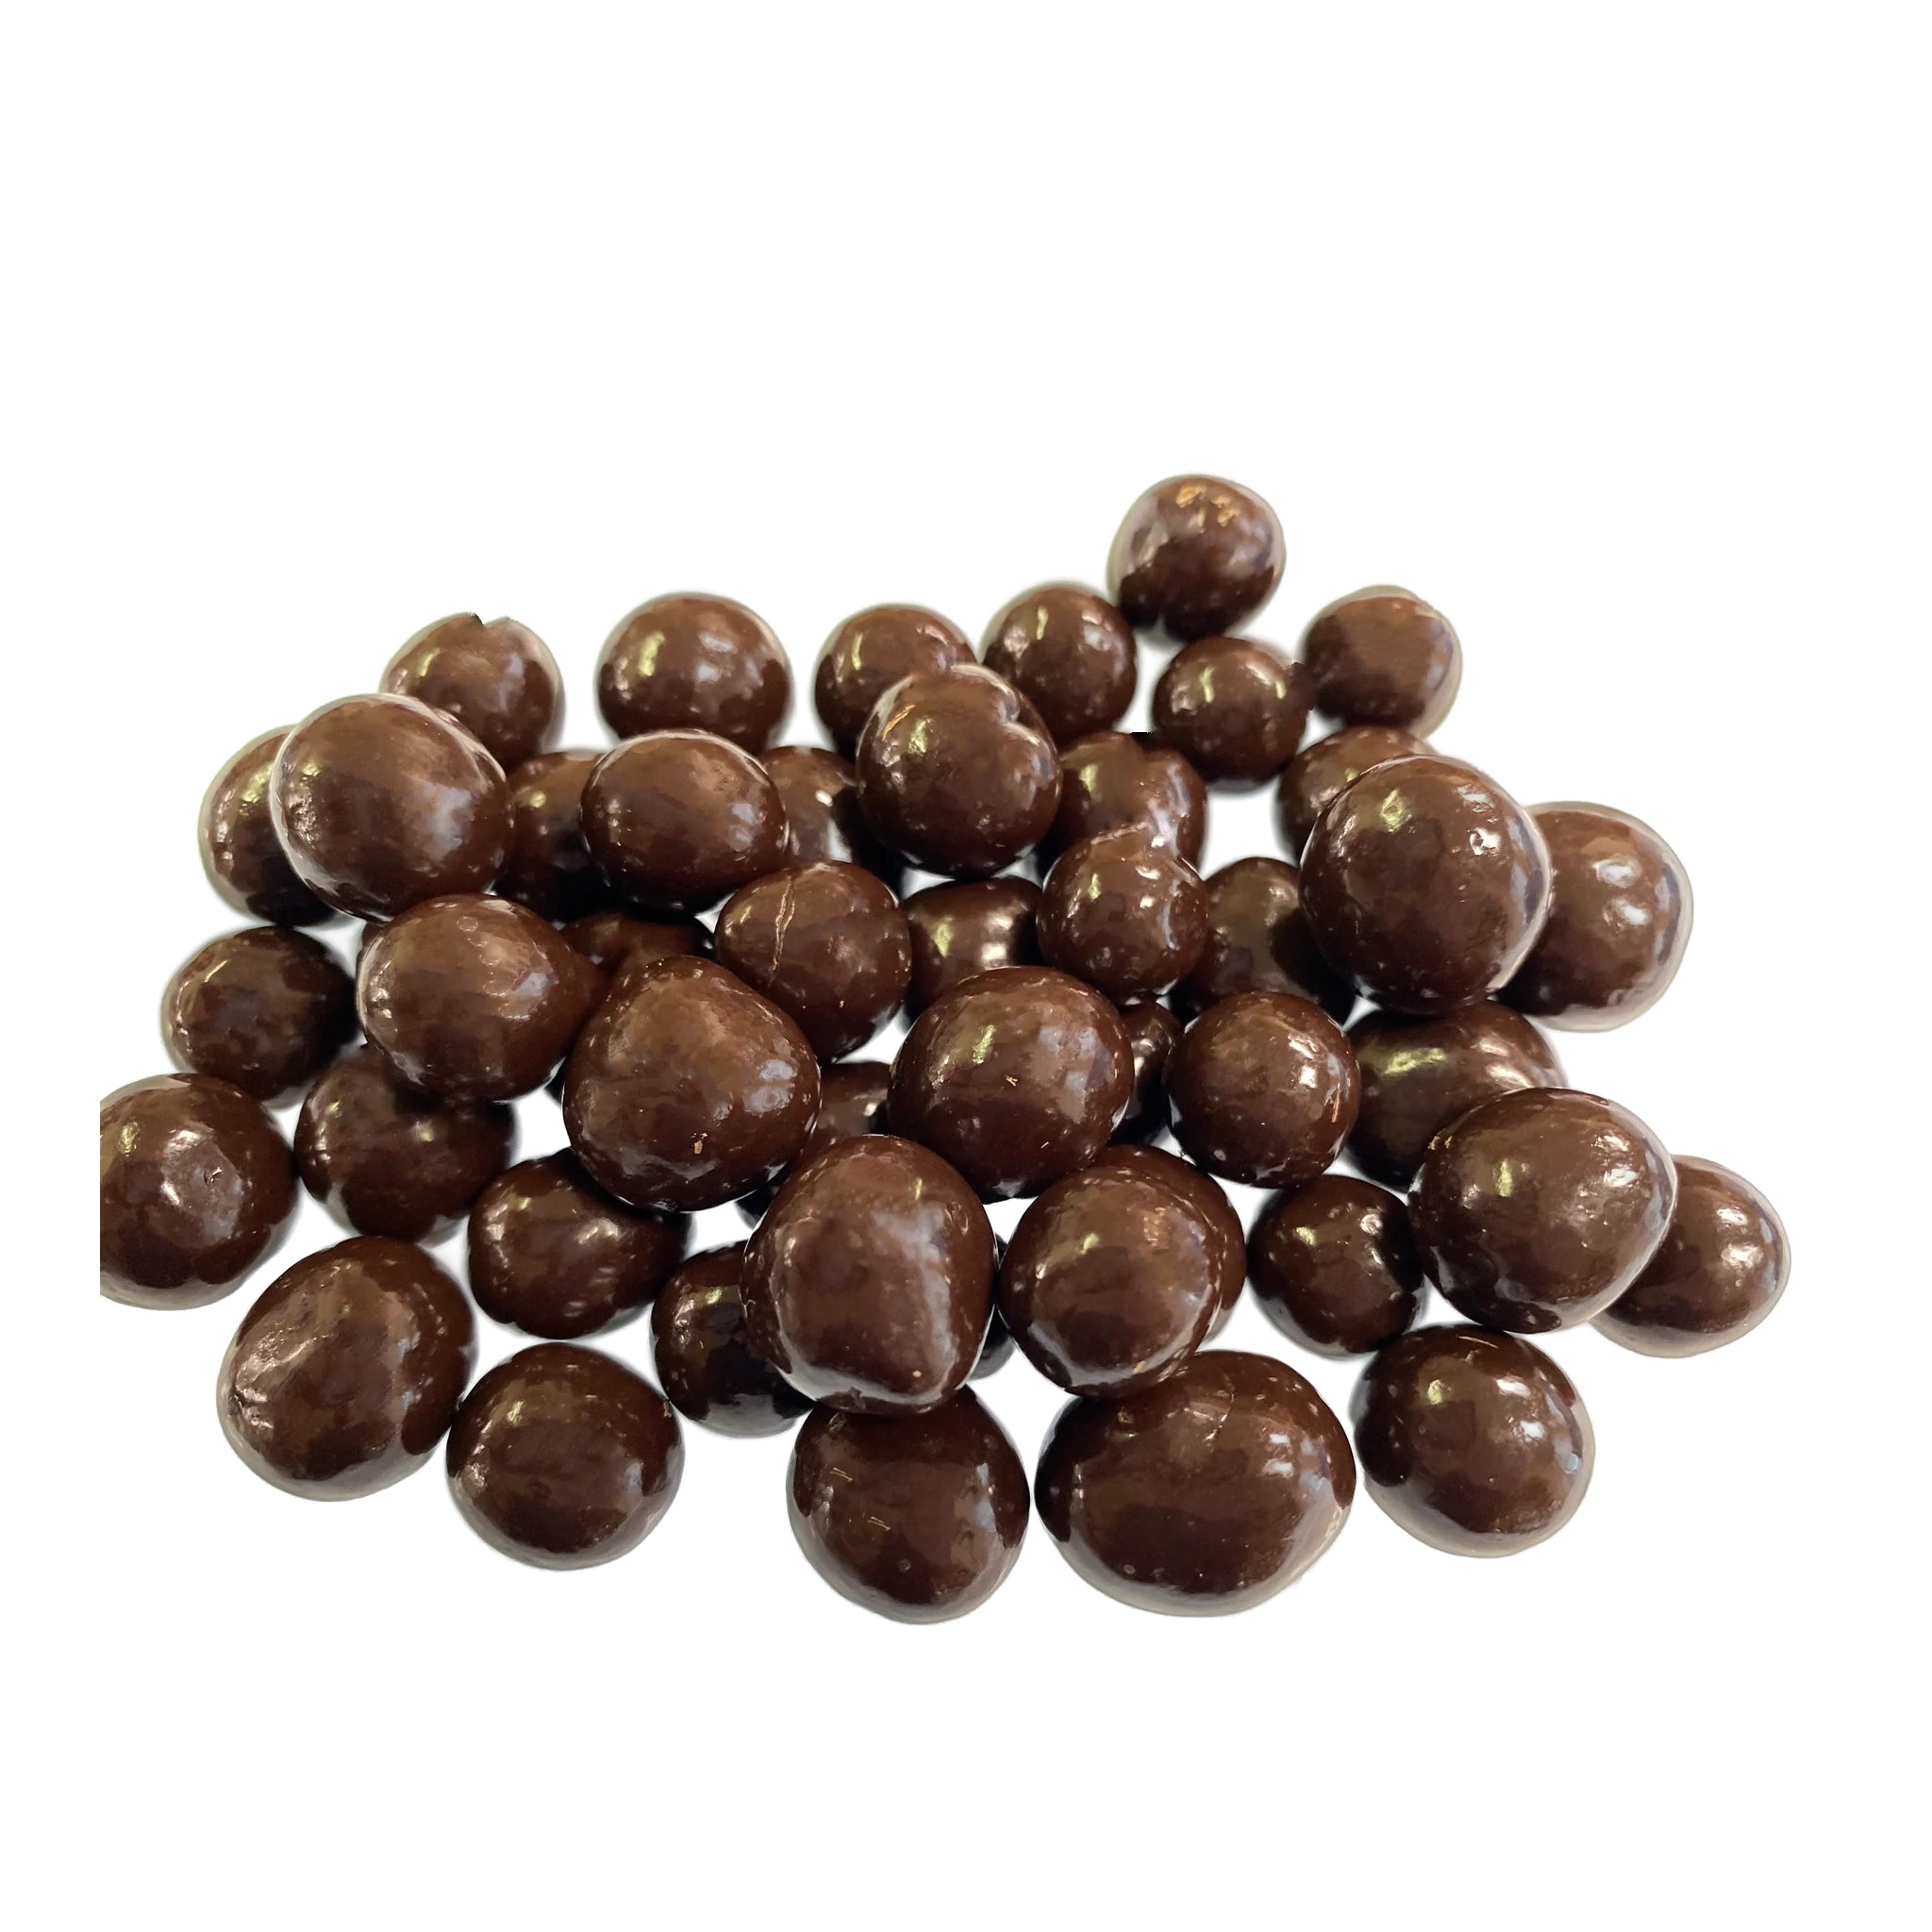 Small round berry shaped dark chocolate pieces 